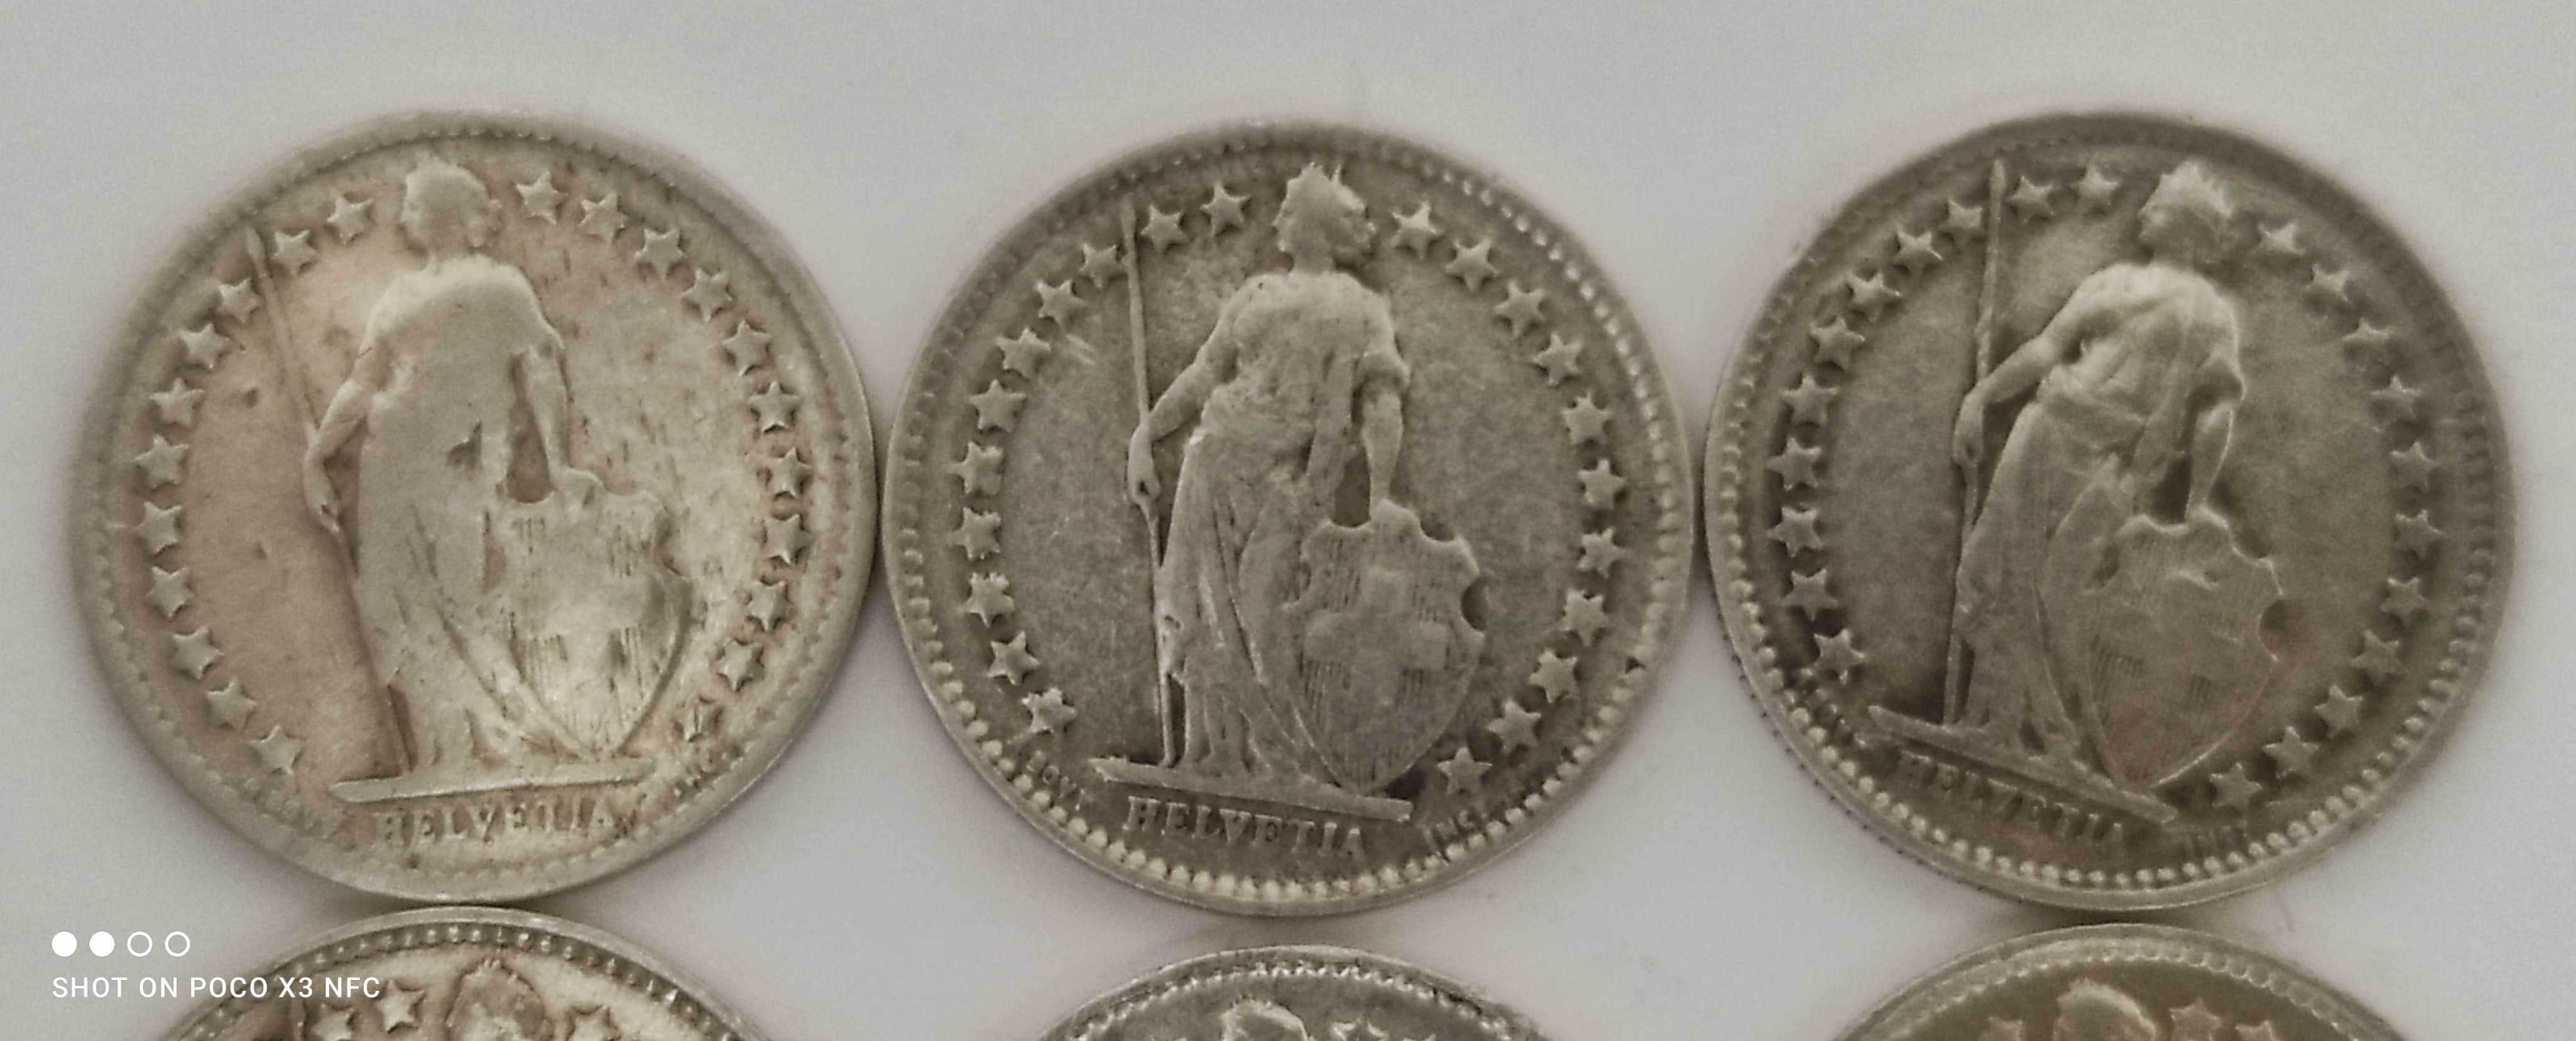 Monety srebrne zestaw 6 sztuk Szwajcaria 1/2 franka ładne srebro Ag